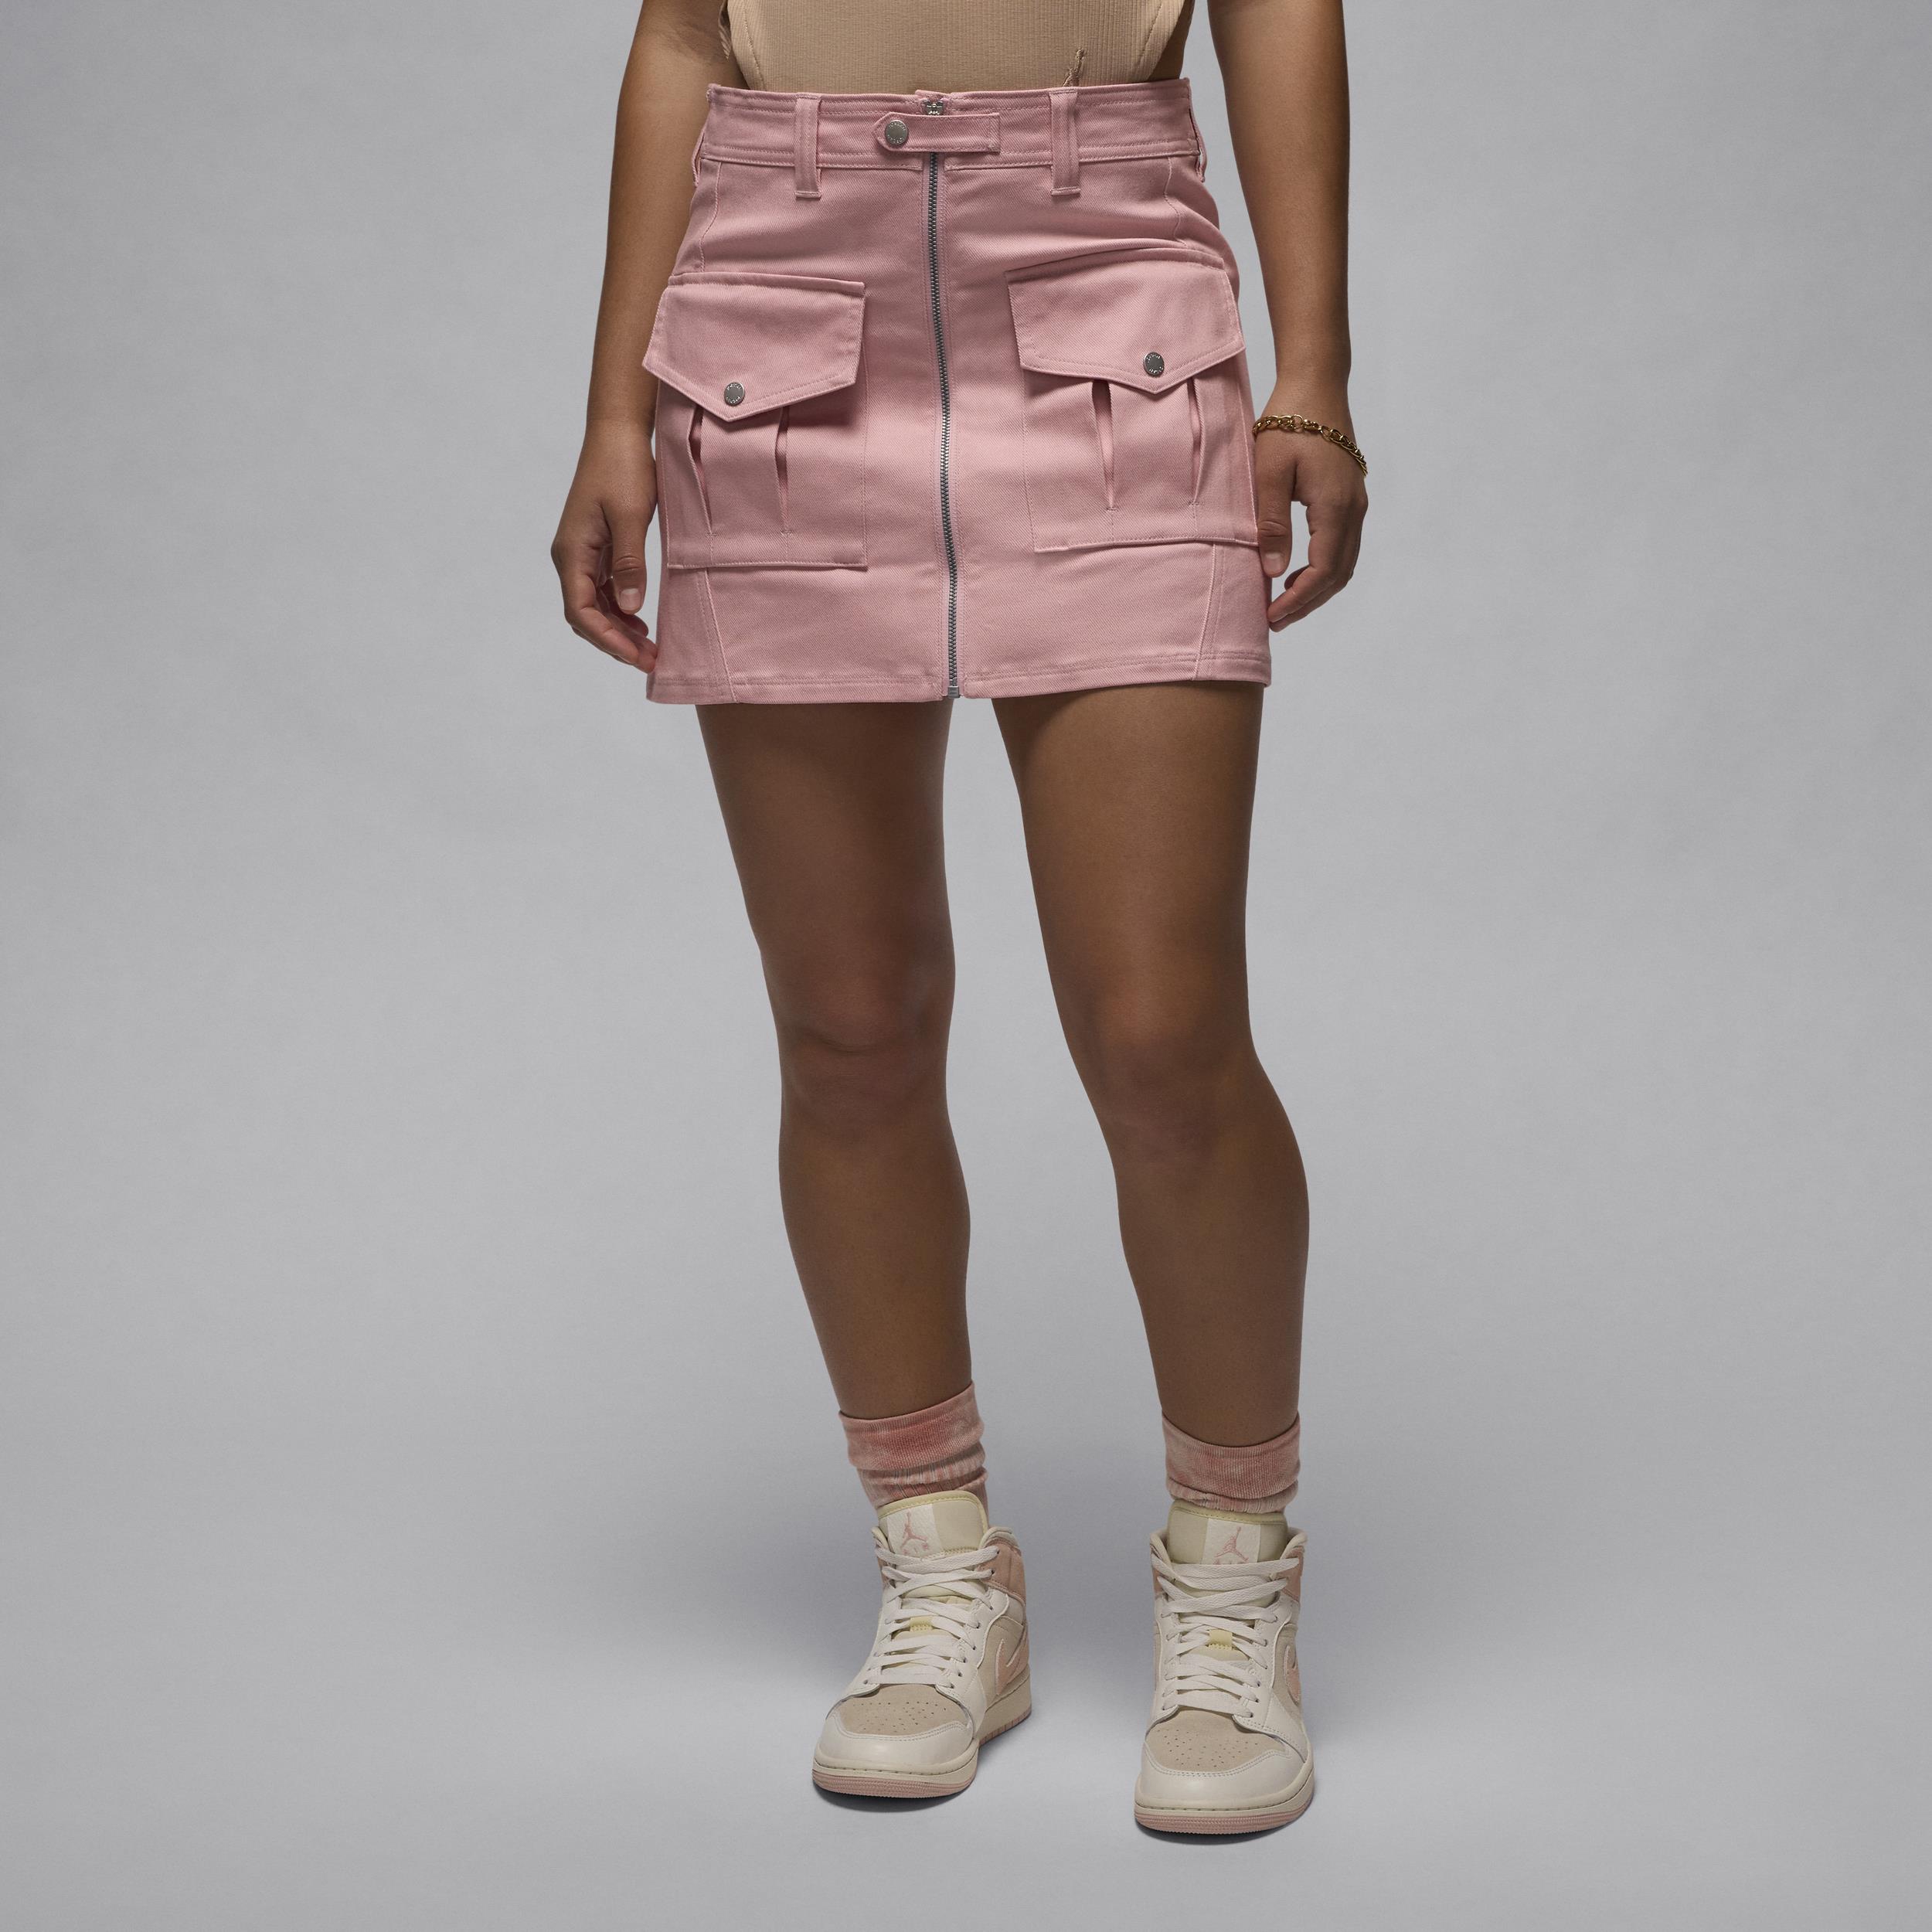 Nike Jordan Women's Utility Skirt - Pink